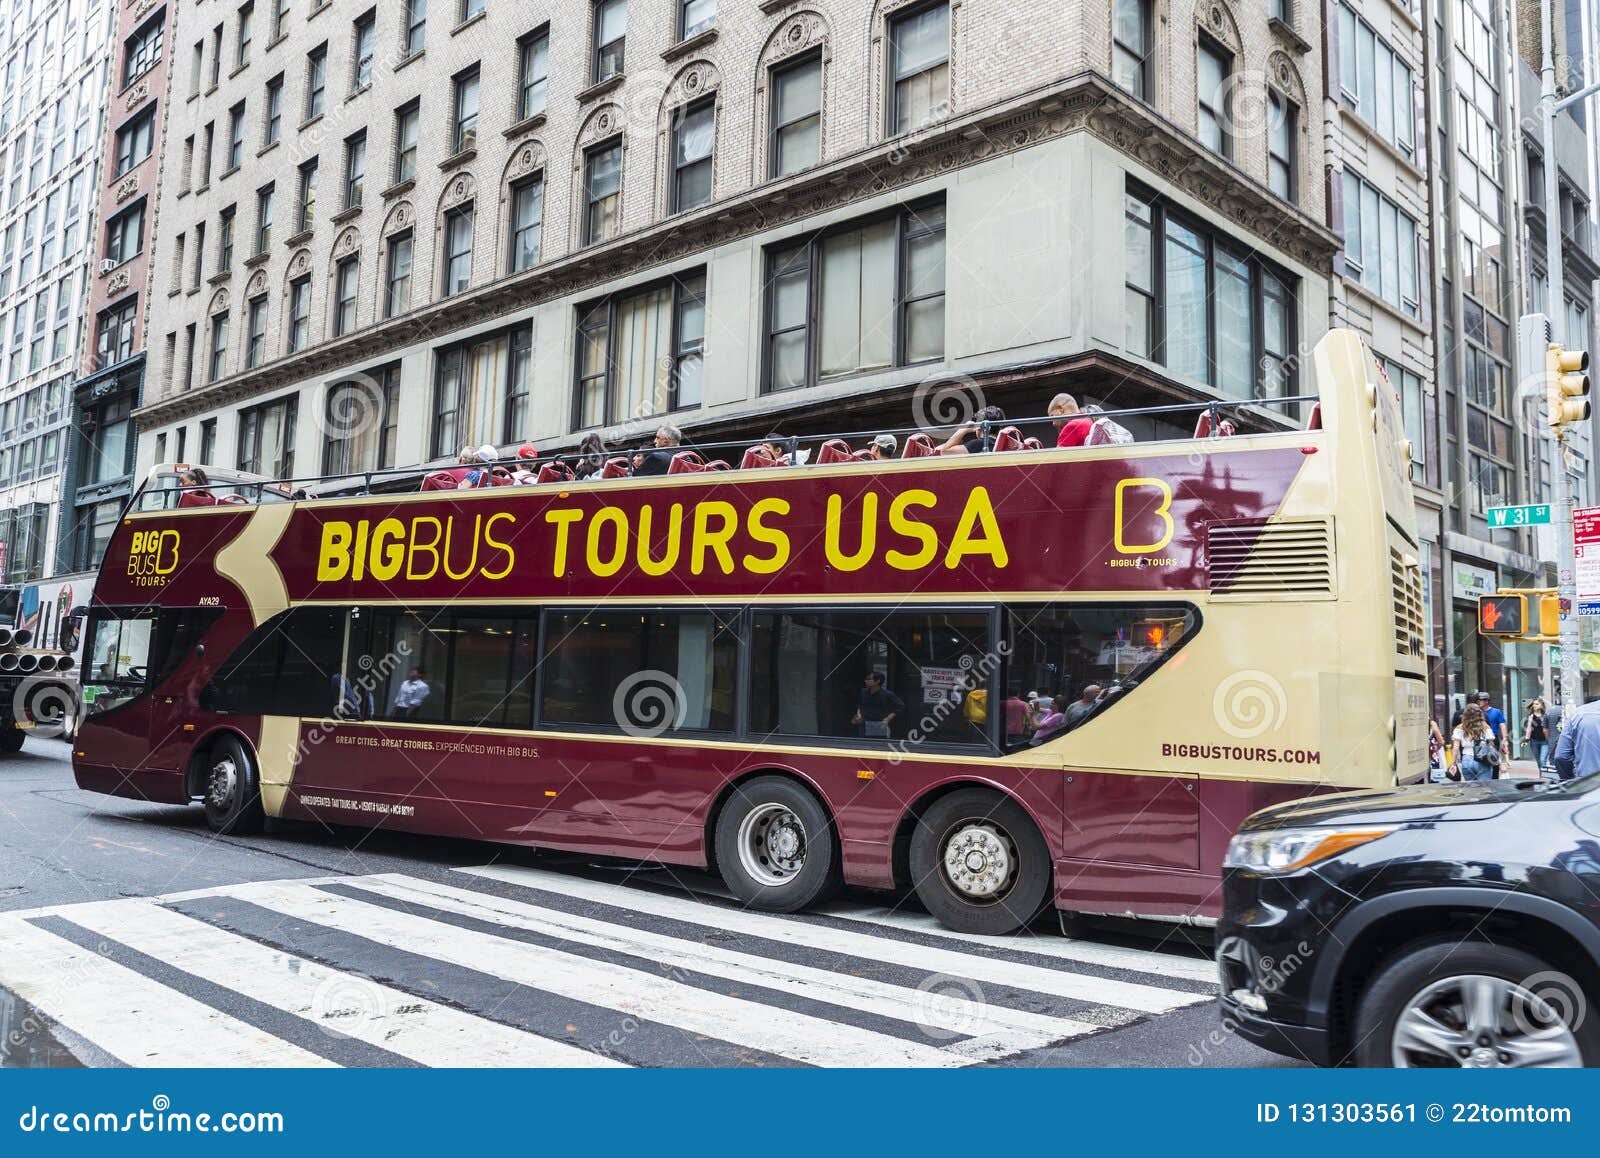 the tour bus new york